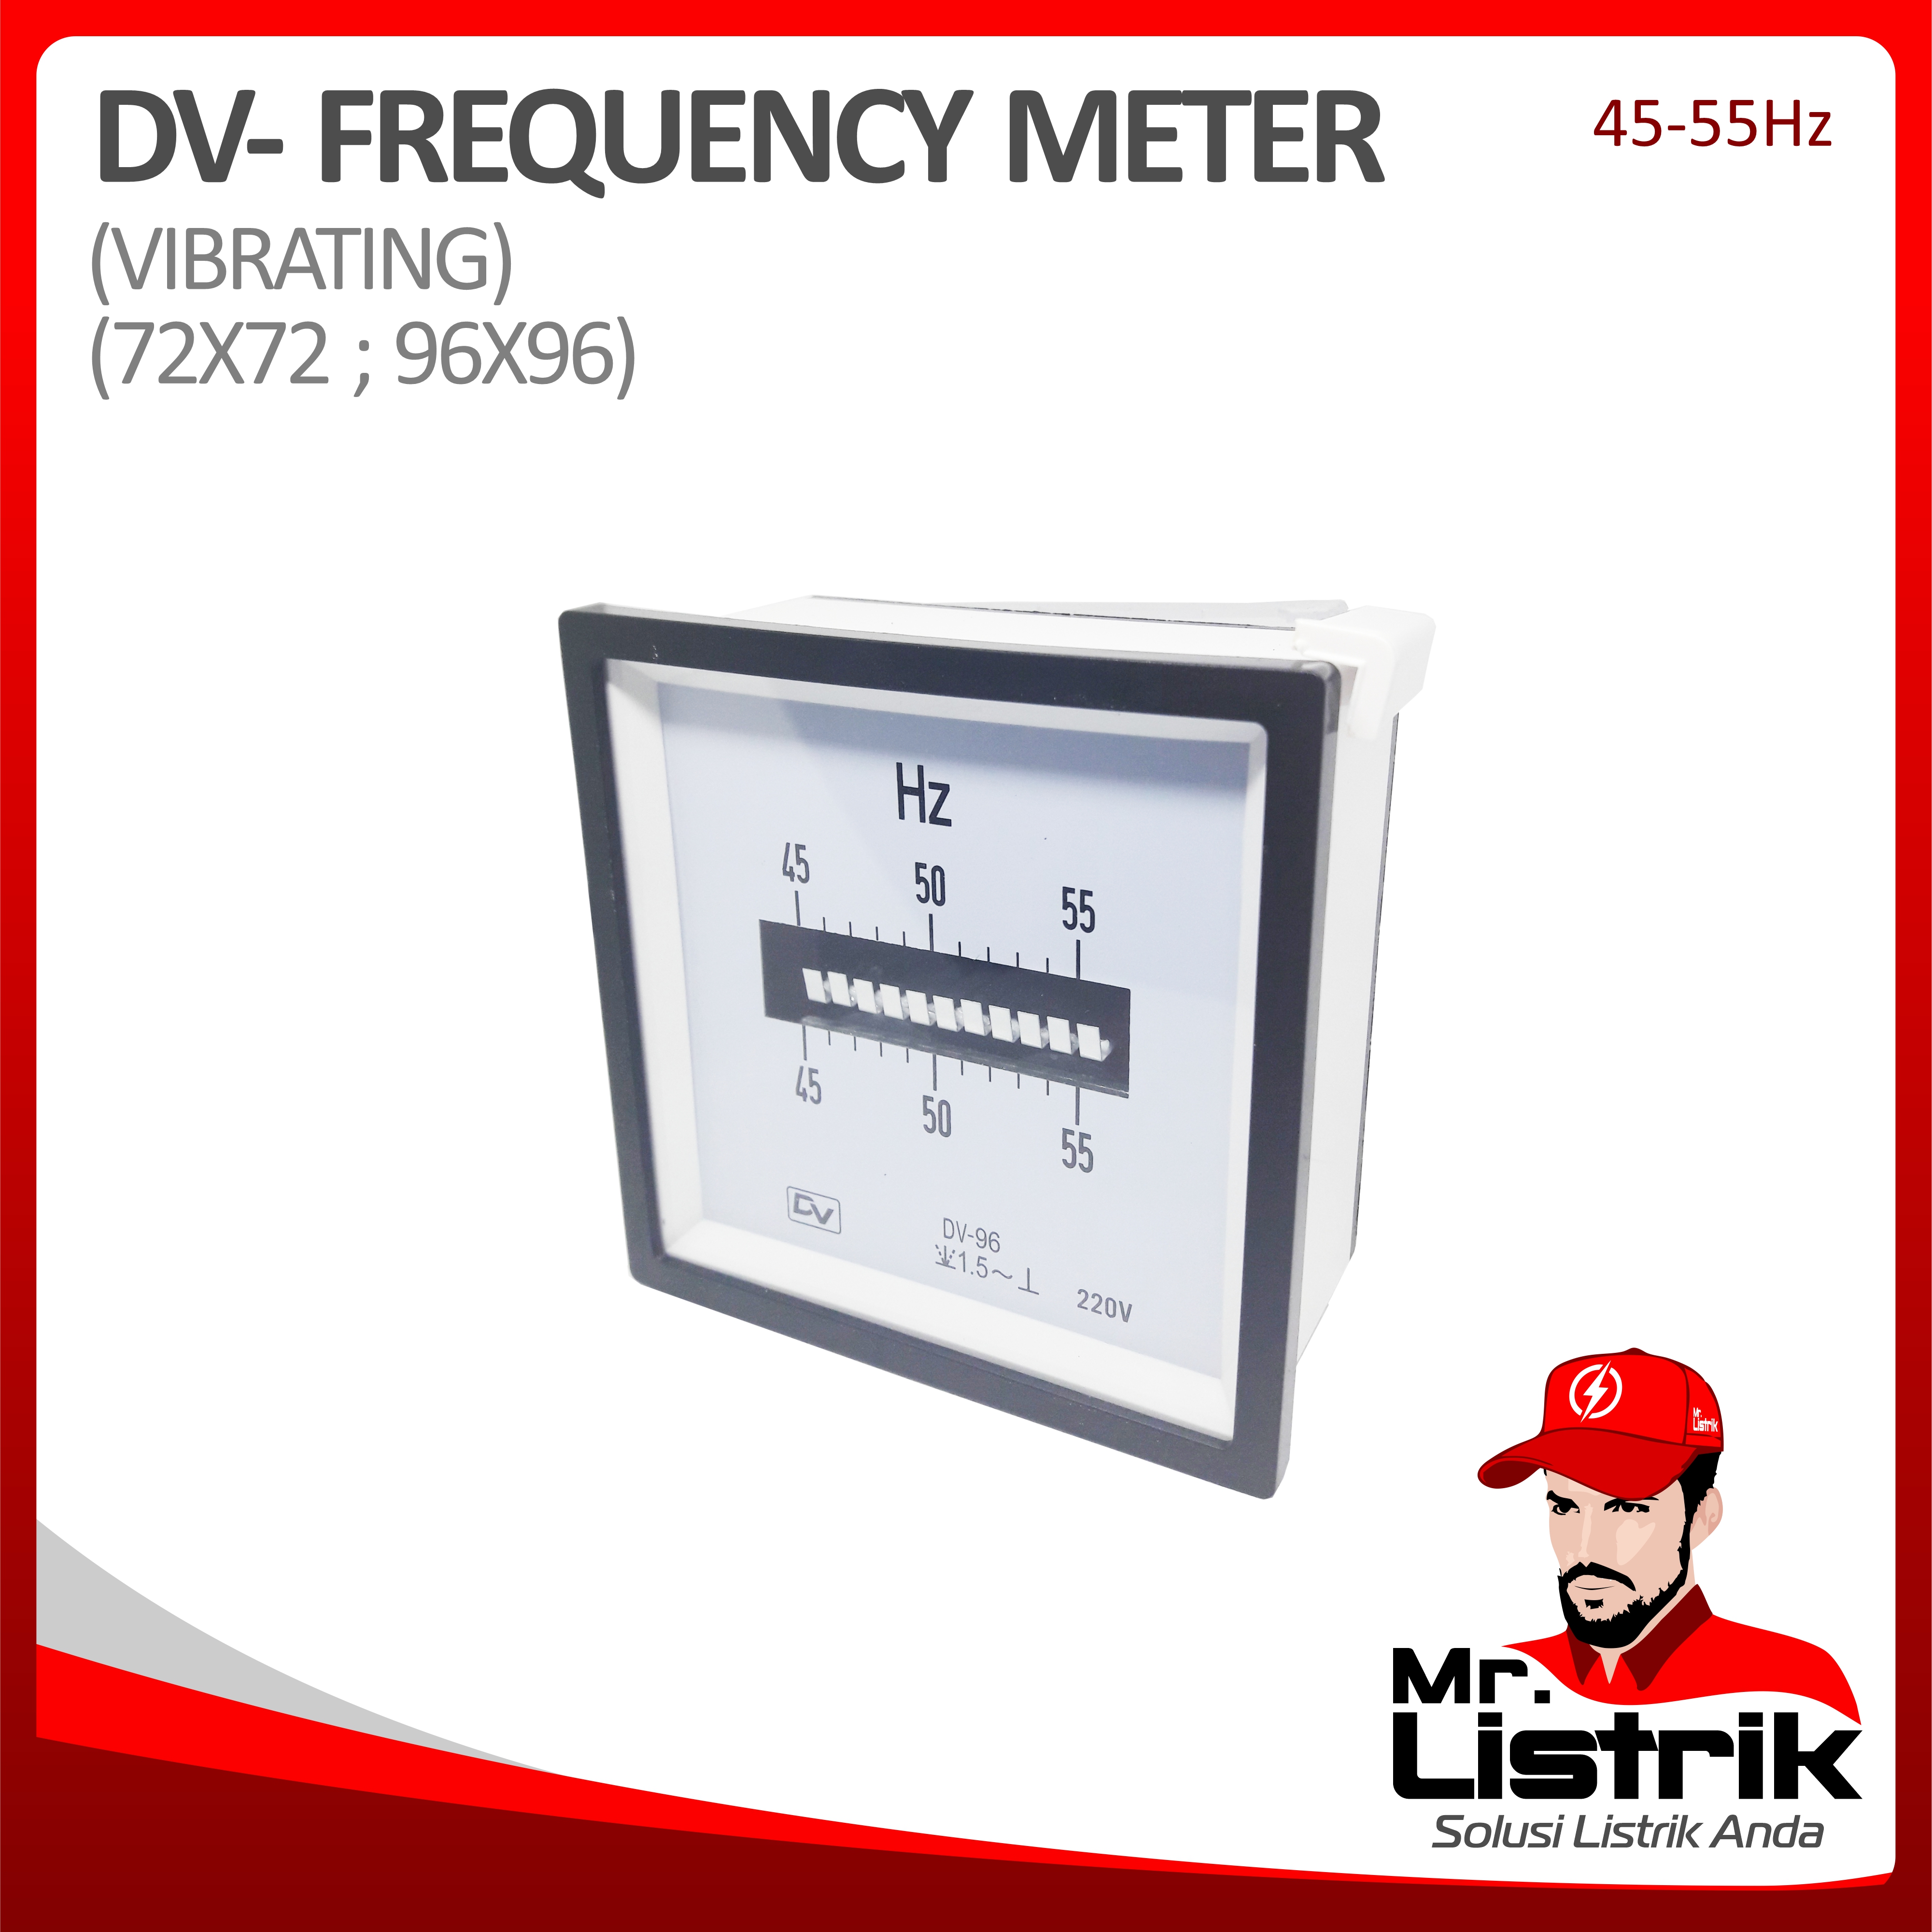 Frequency Meter Vibrating DV 96x96 45-55Hz